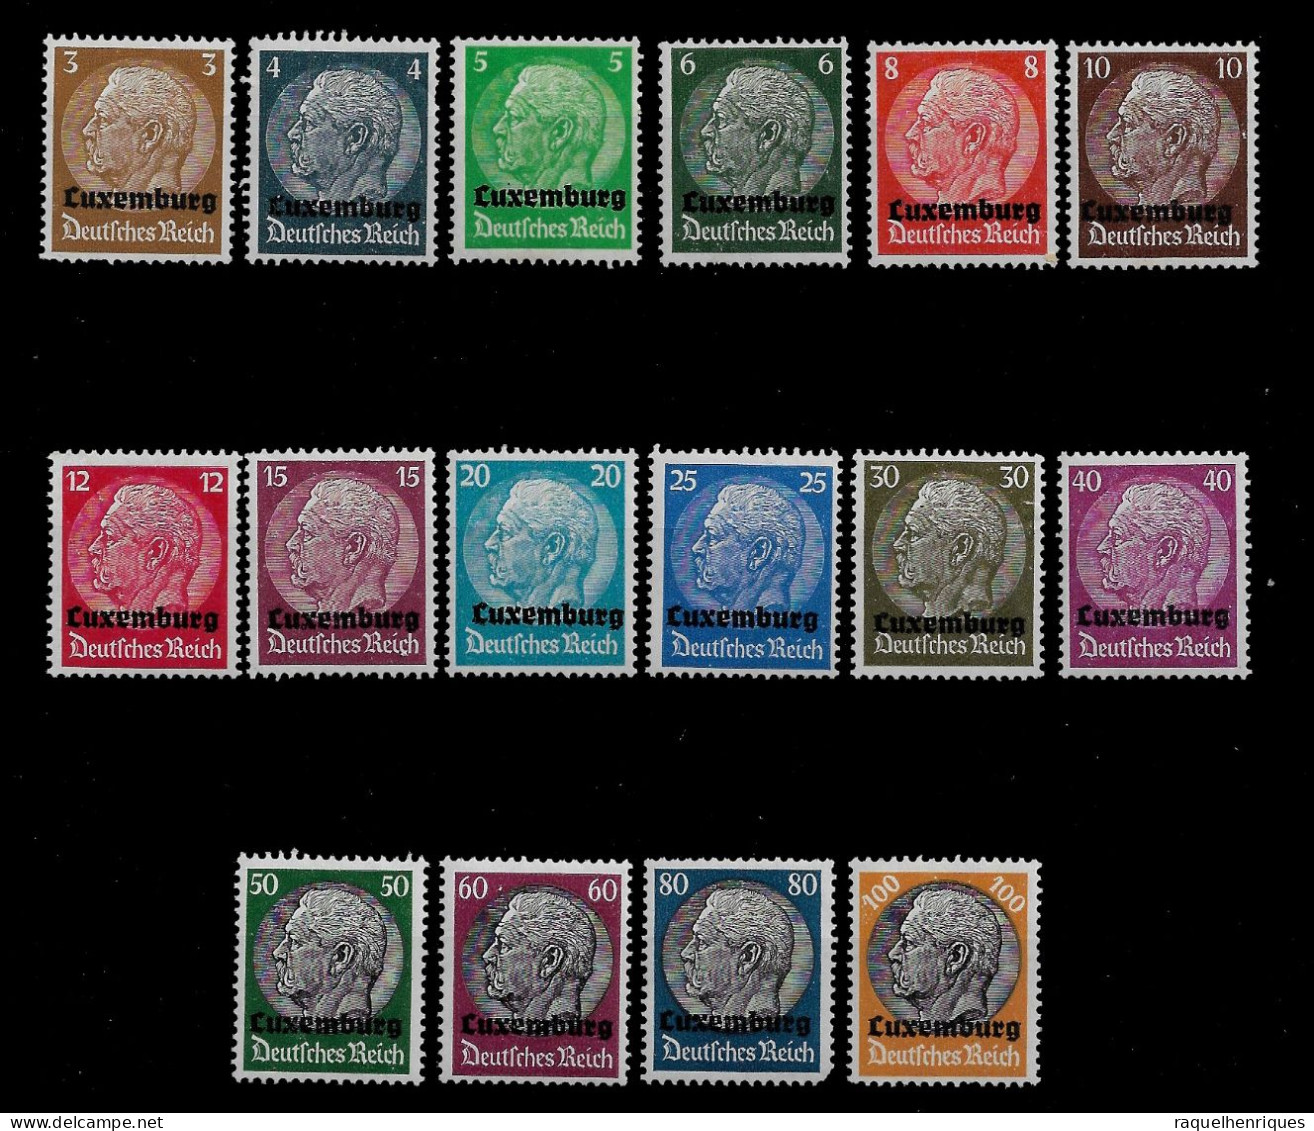 LUXEMBOURG GERMAN OCCUPATION - 1940 German Empire Postage Stamps Overprinted "Luxemburg" SET MNH (STB10-A05) - 1940-1944 Deutsche Besatzung